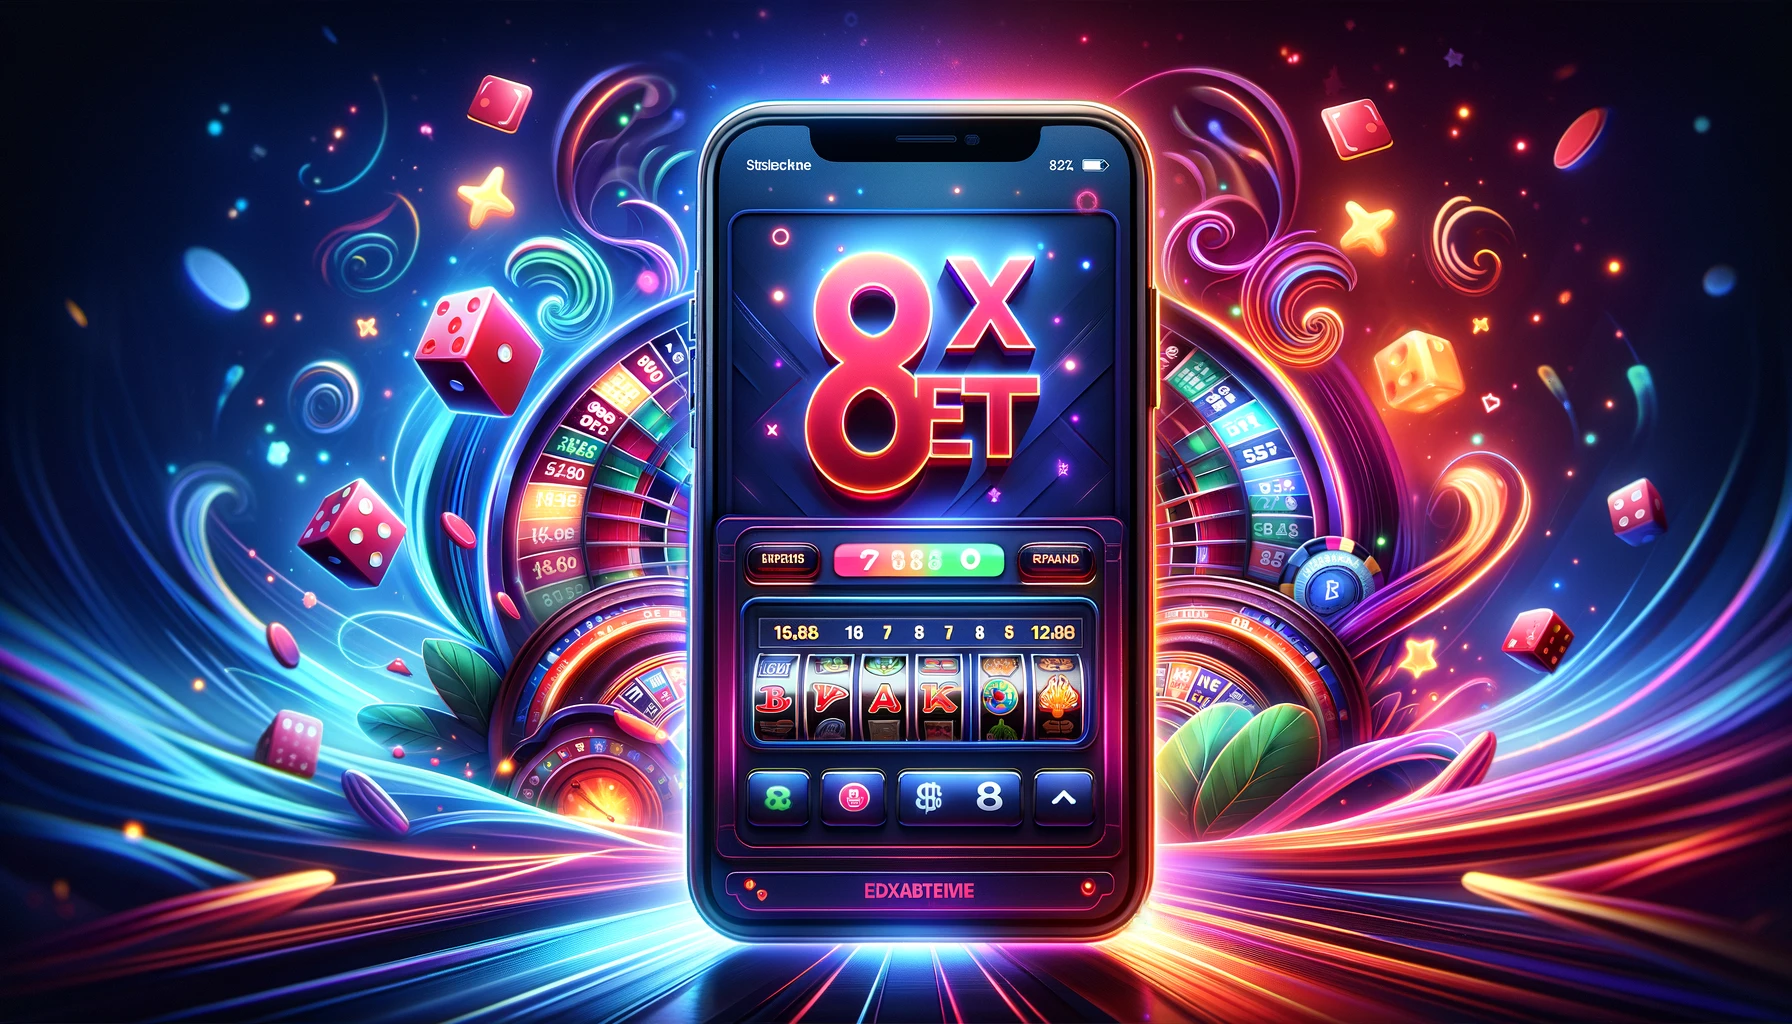 8xbet casino trên mobile app